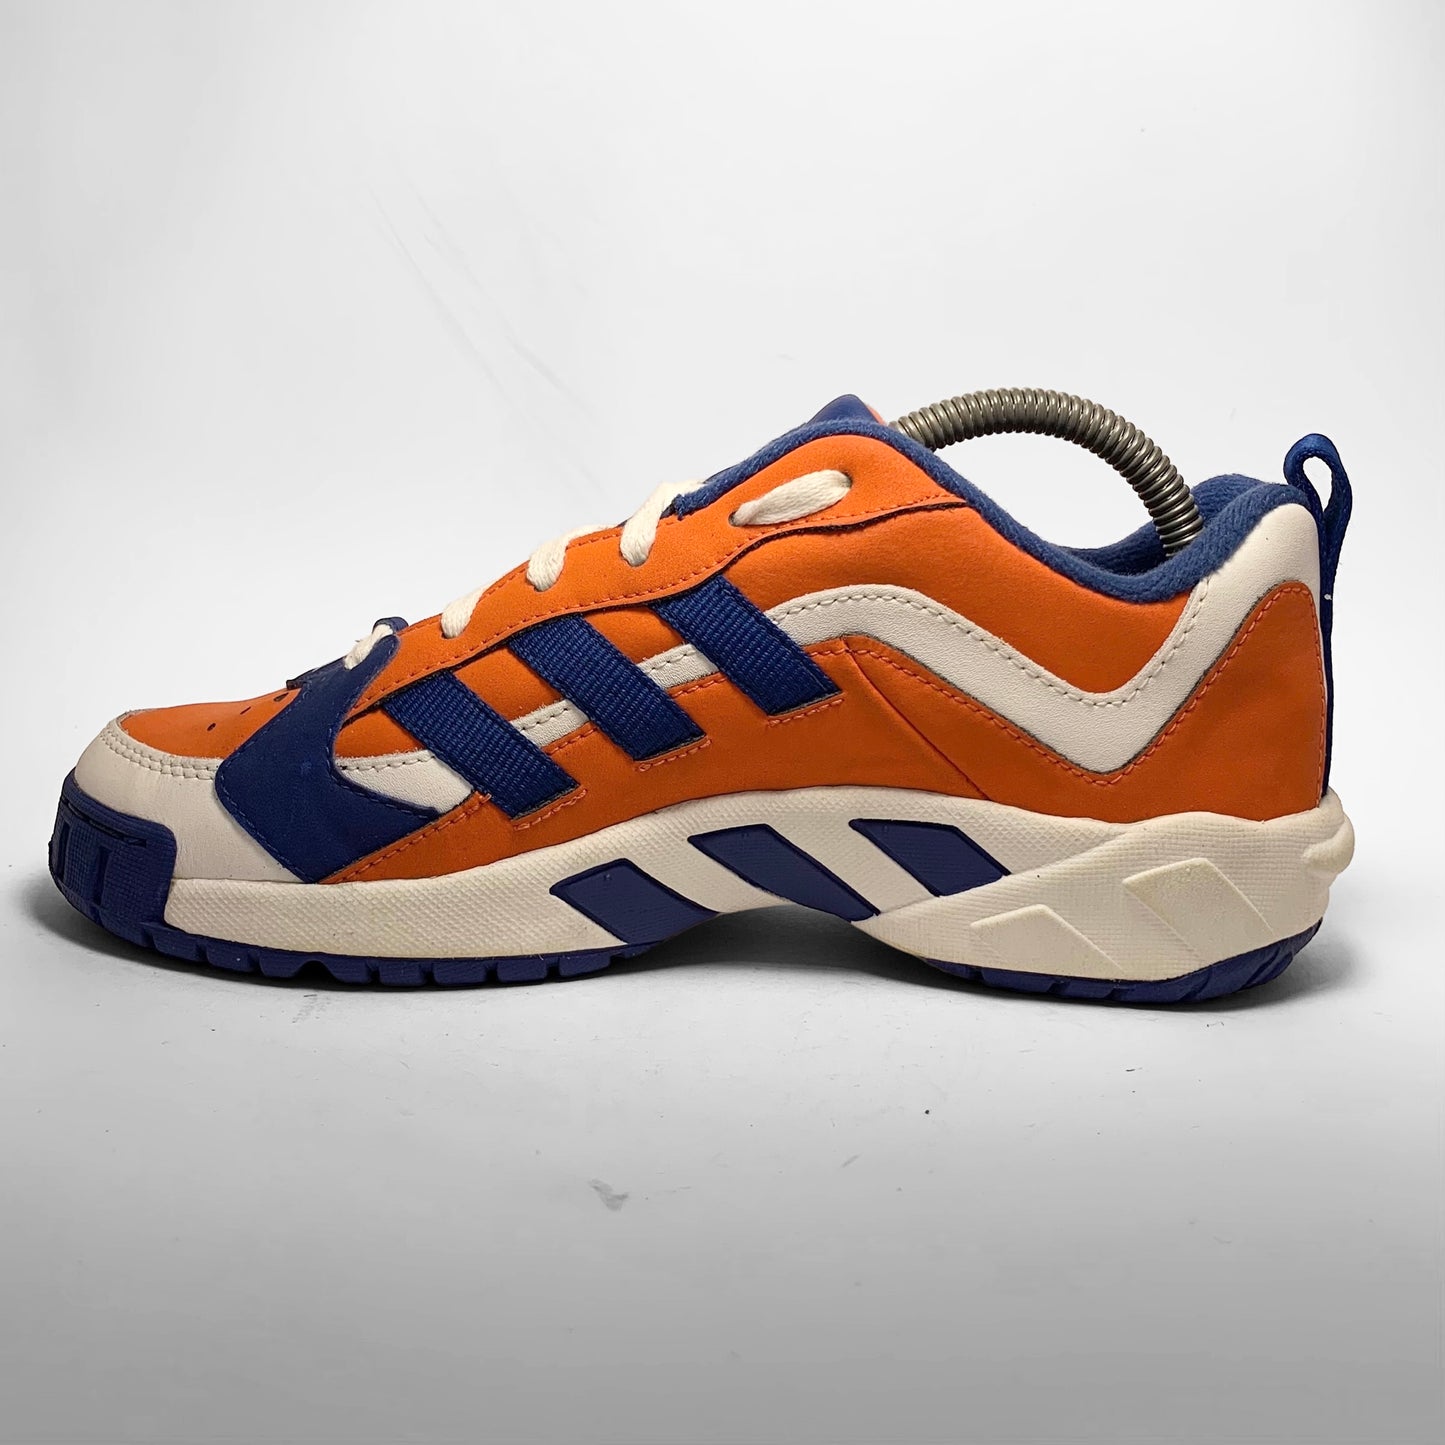 Adidas Torsion (1998)